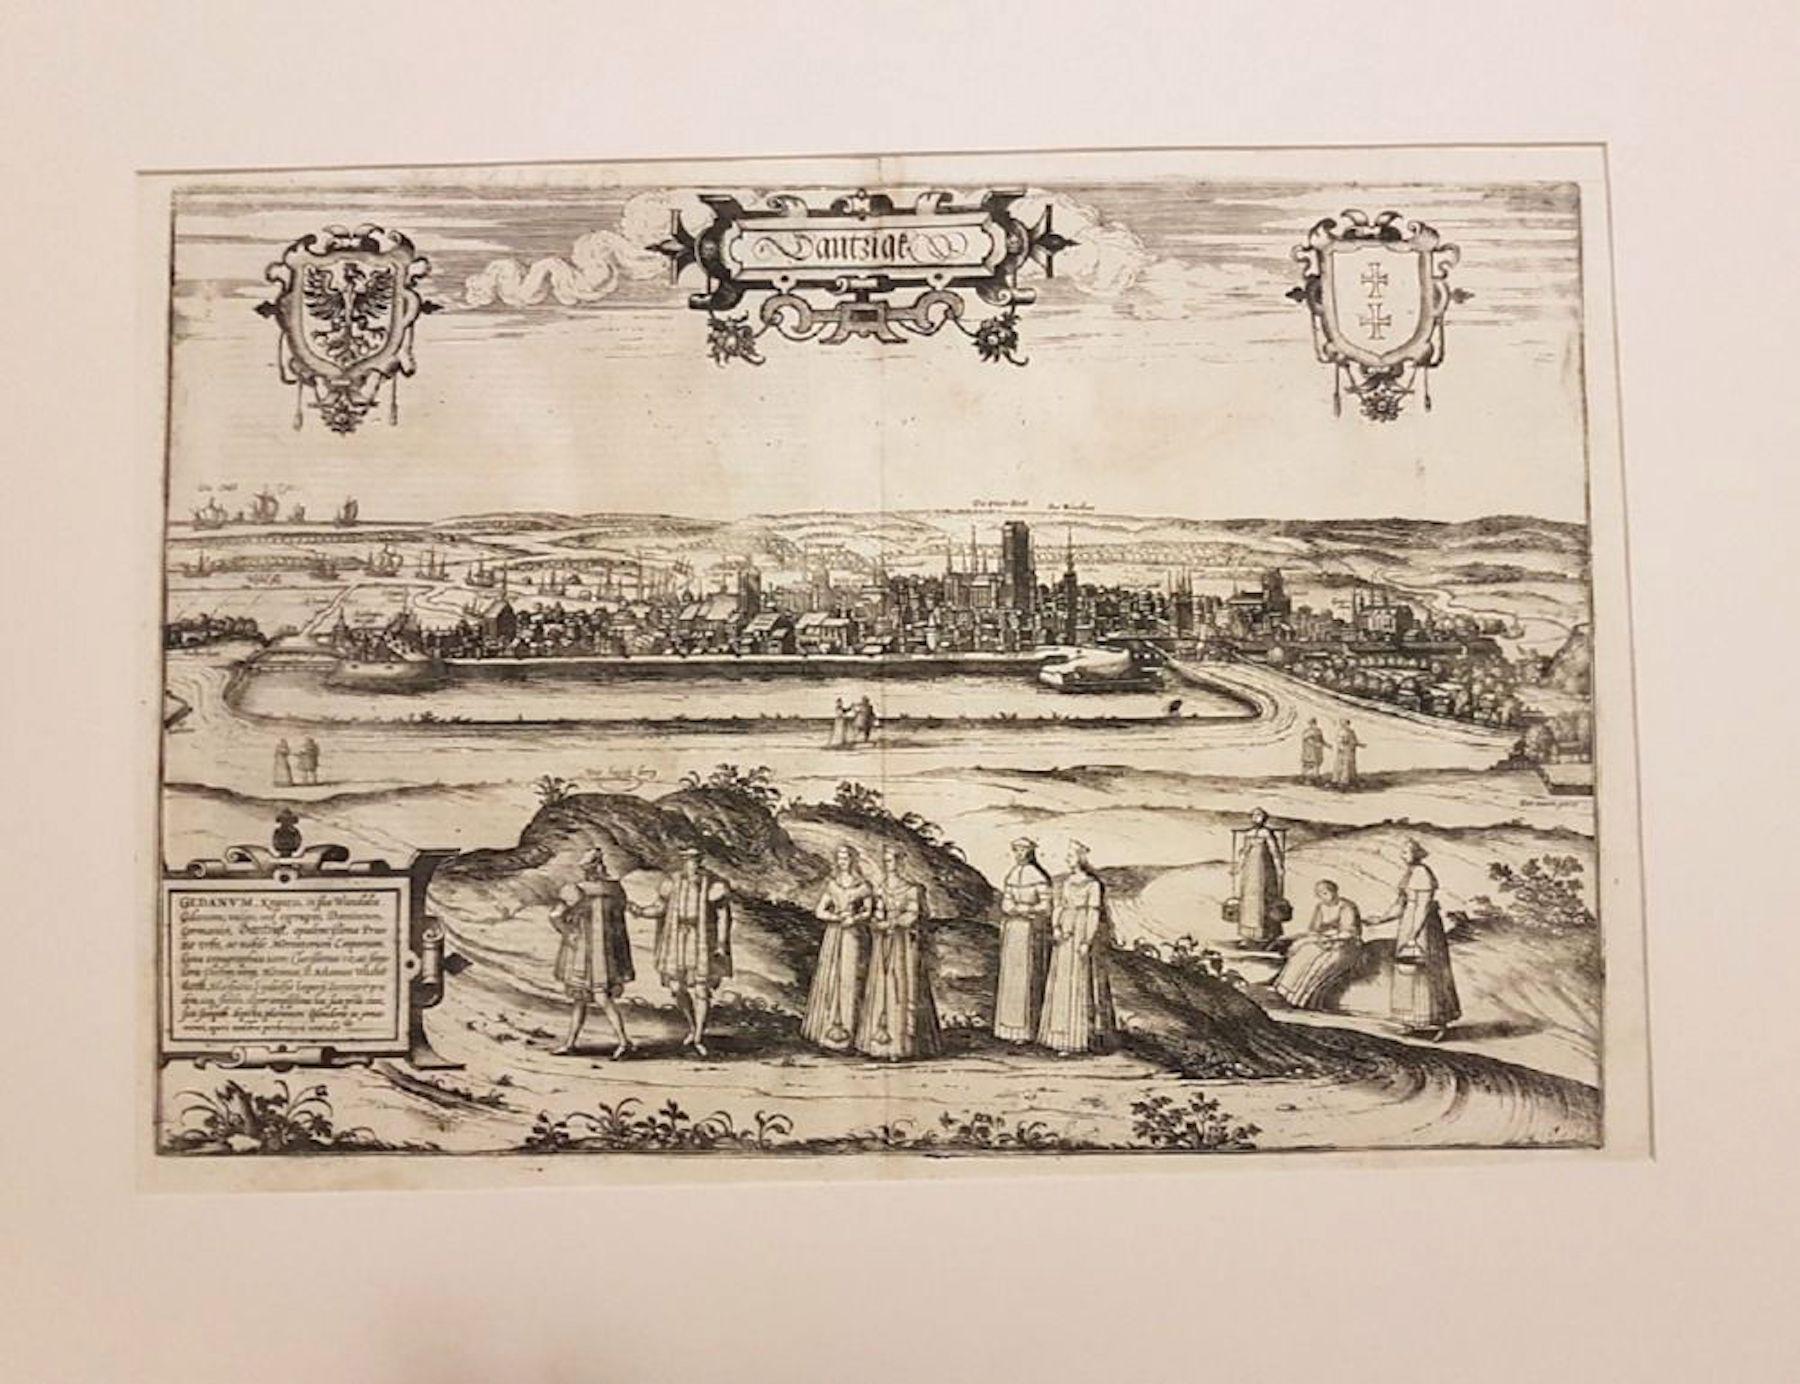 Frans Hogenberg Landscape Print - Danzig, Antique Map from "Civitates Orbis Terrarum" - 1572-1617